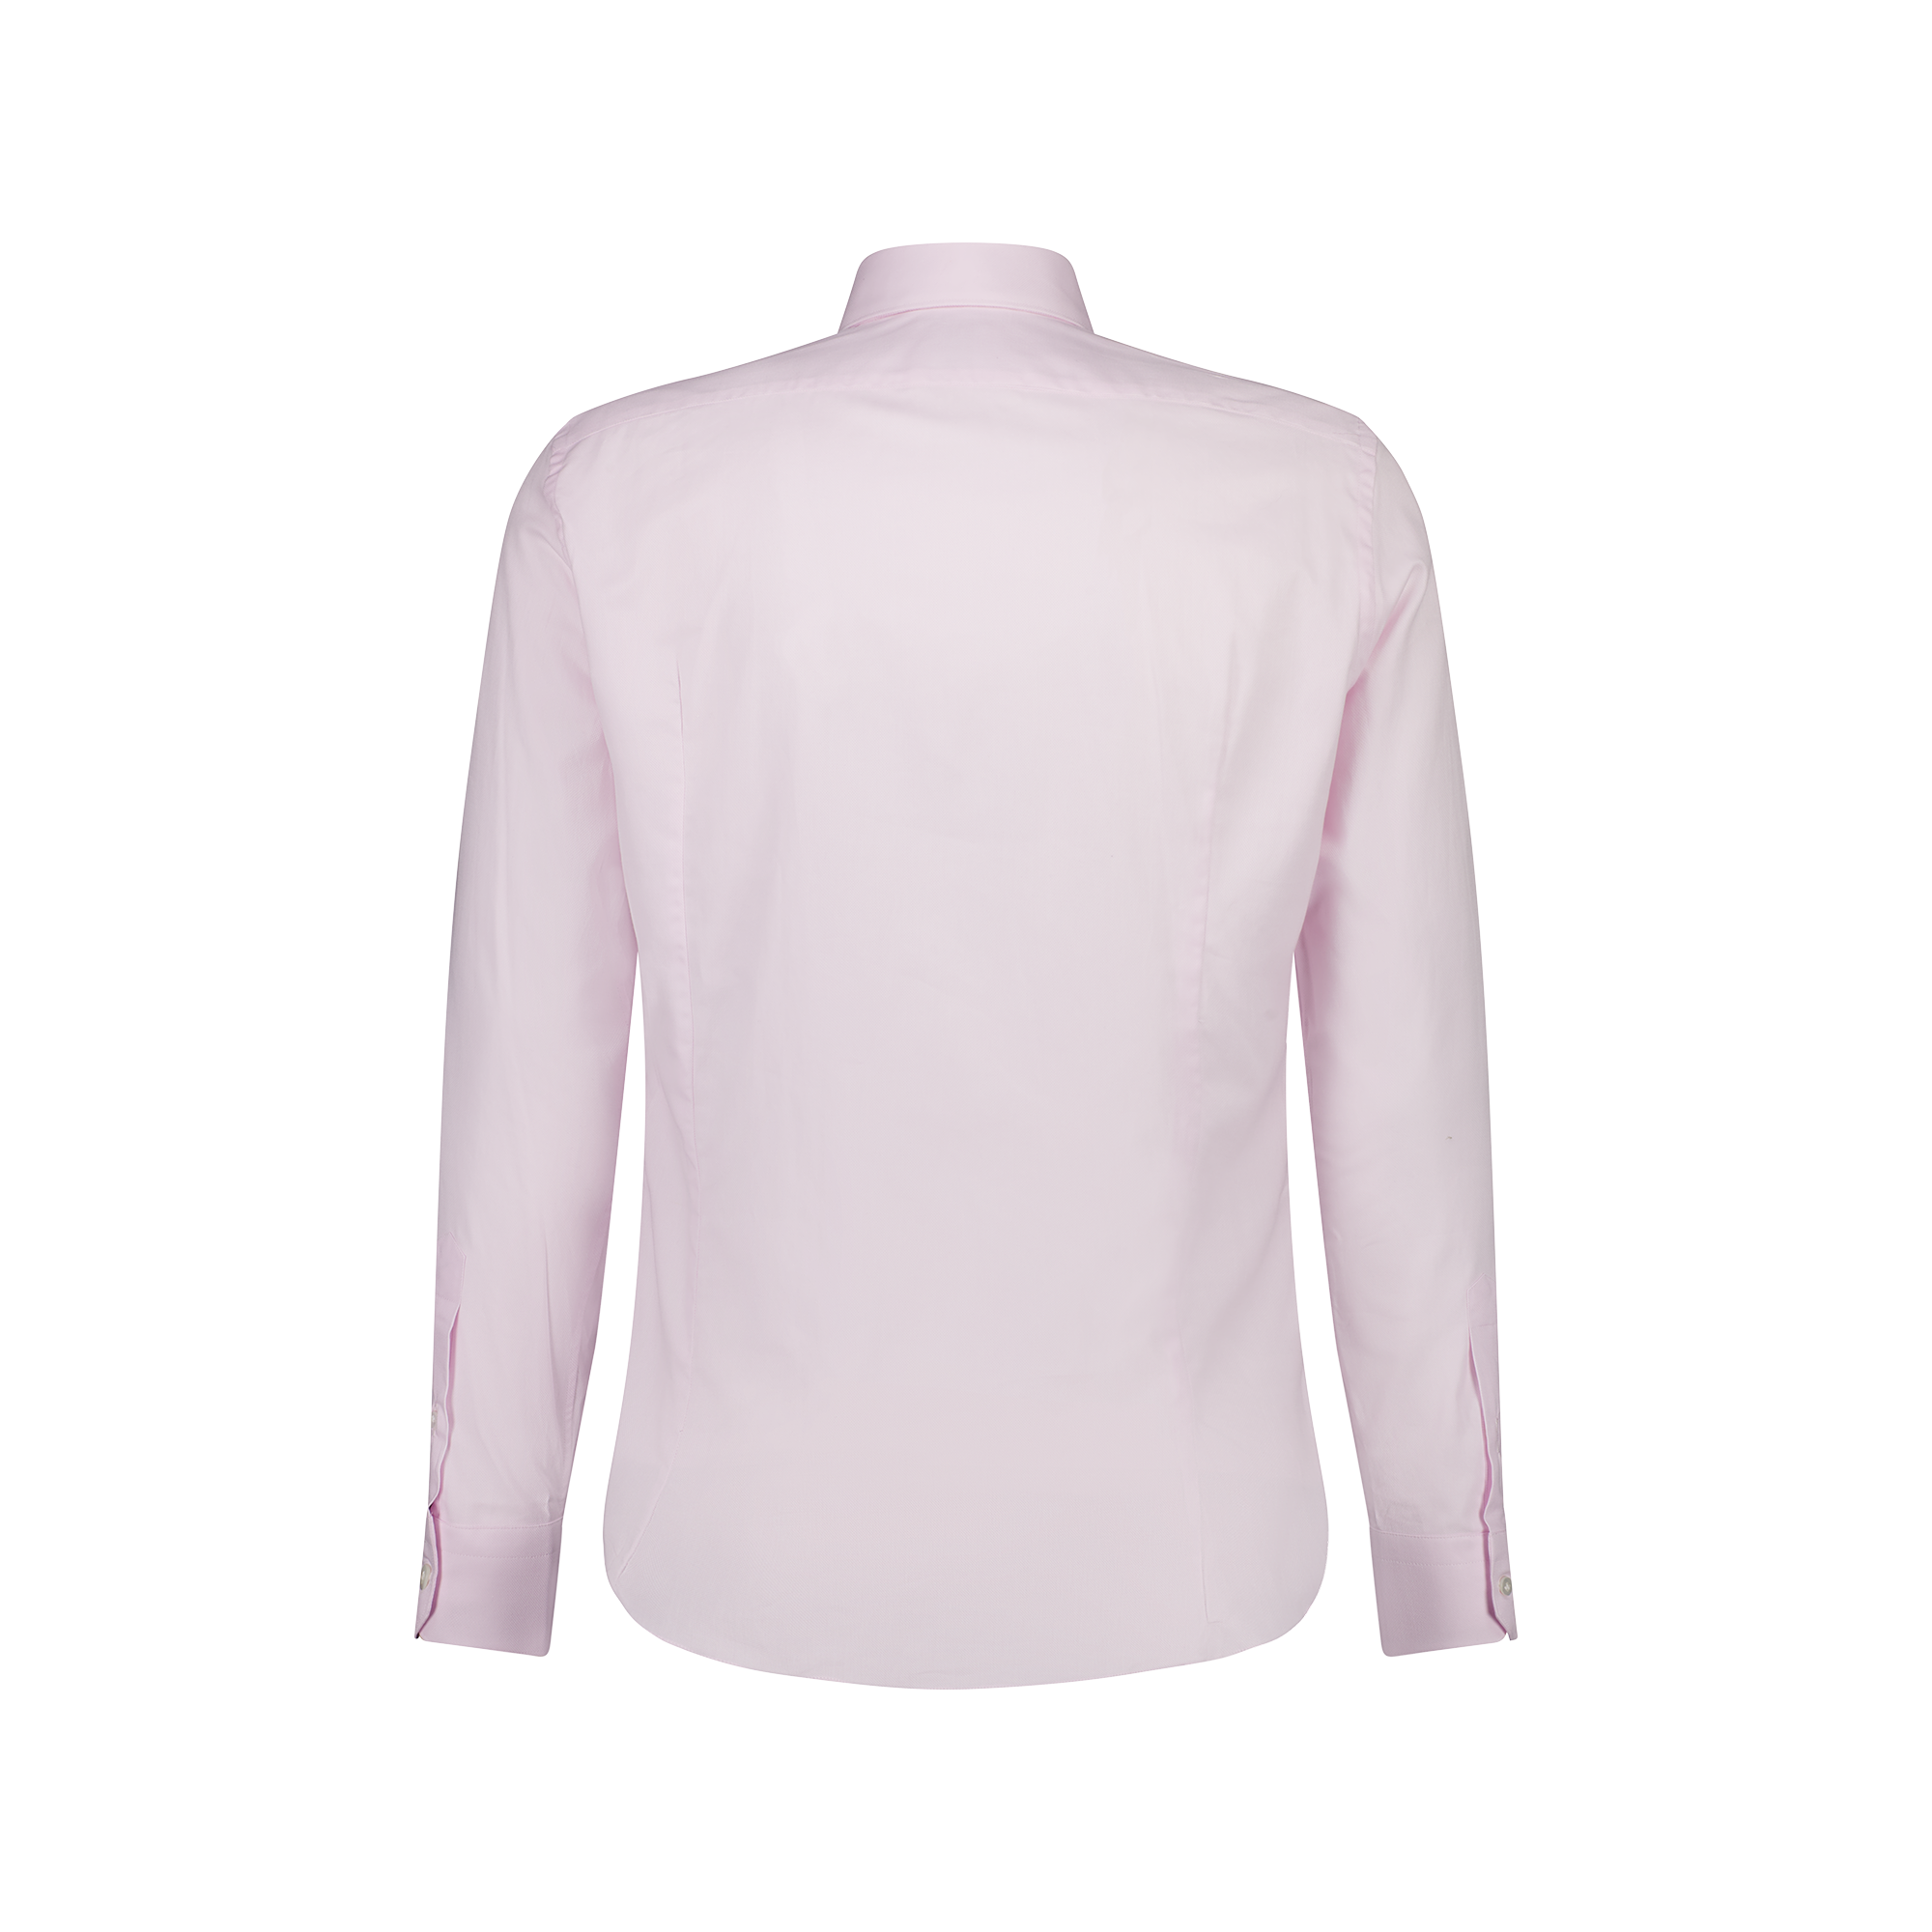 CORDONE Elegance Shirt in PINK/WHITE